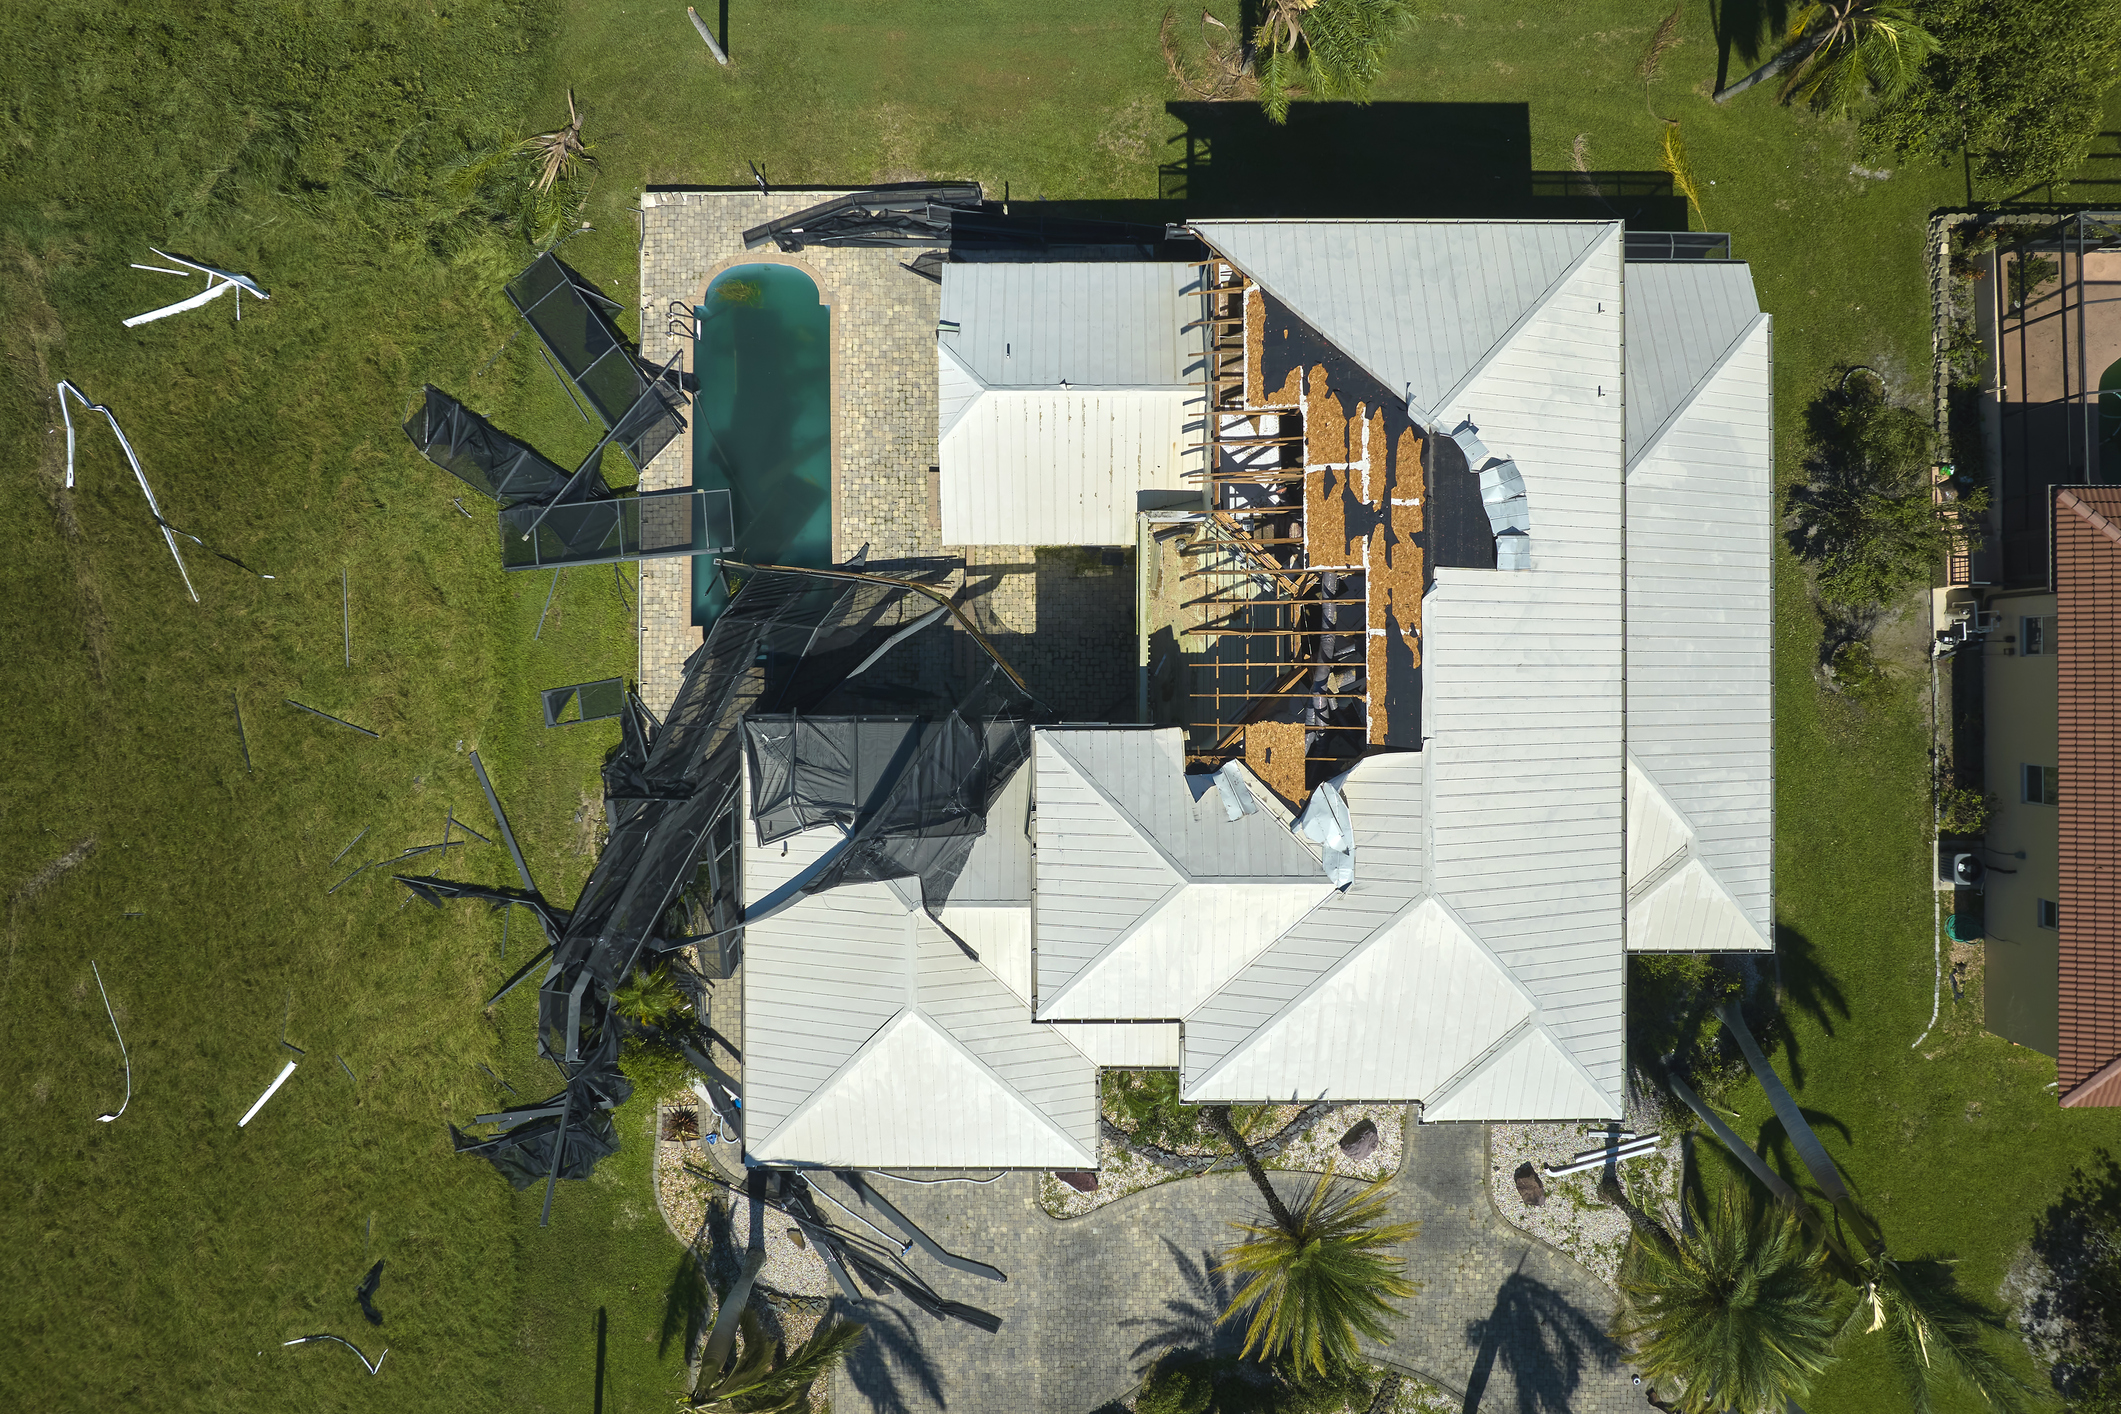 Hurricane Ian destroyed swimming pool lanai enclosure on house yard in Florida residential area